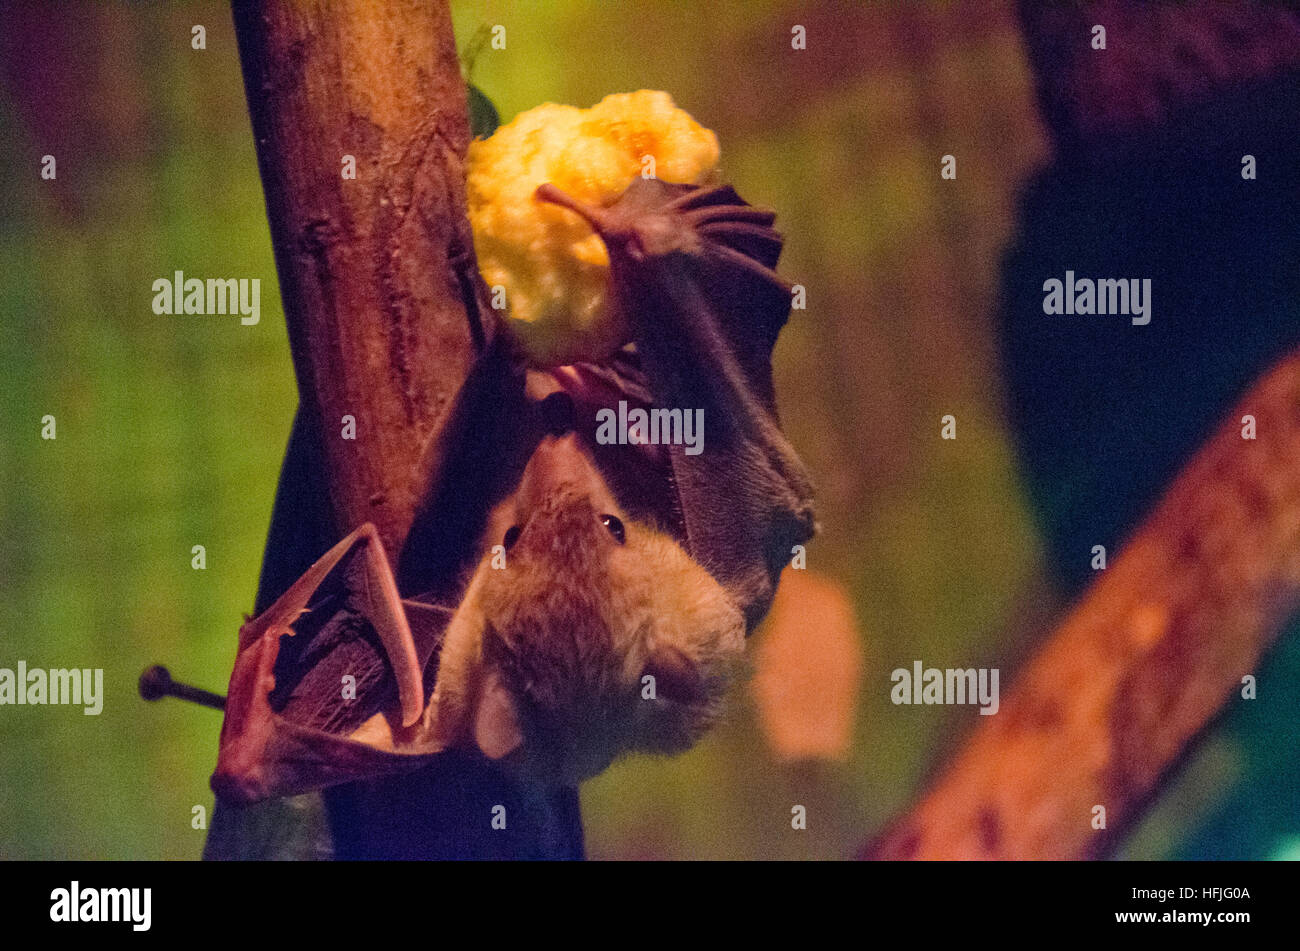 Bat feeding on an apple Stock Photo